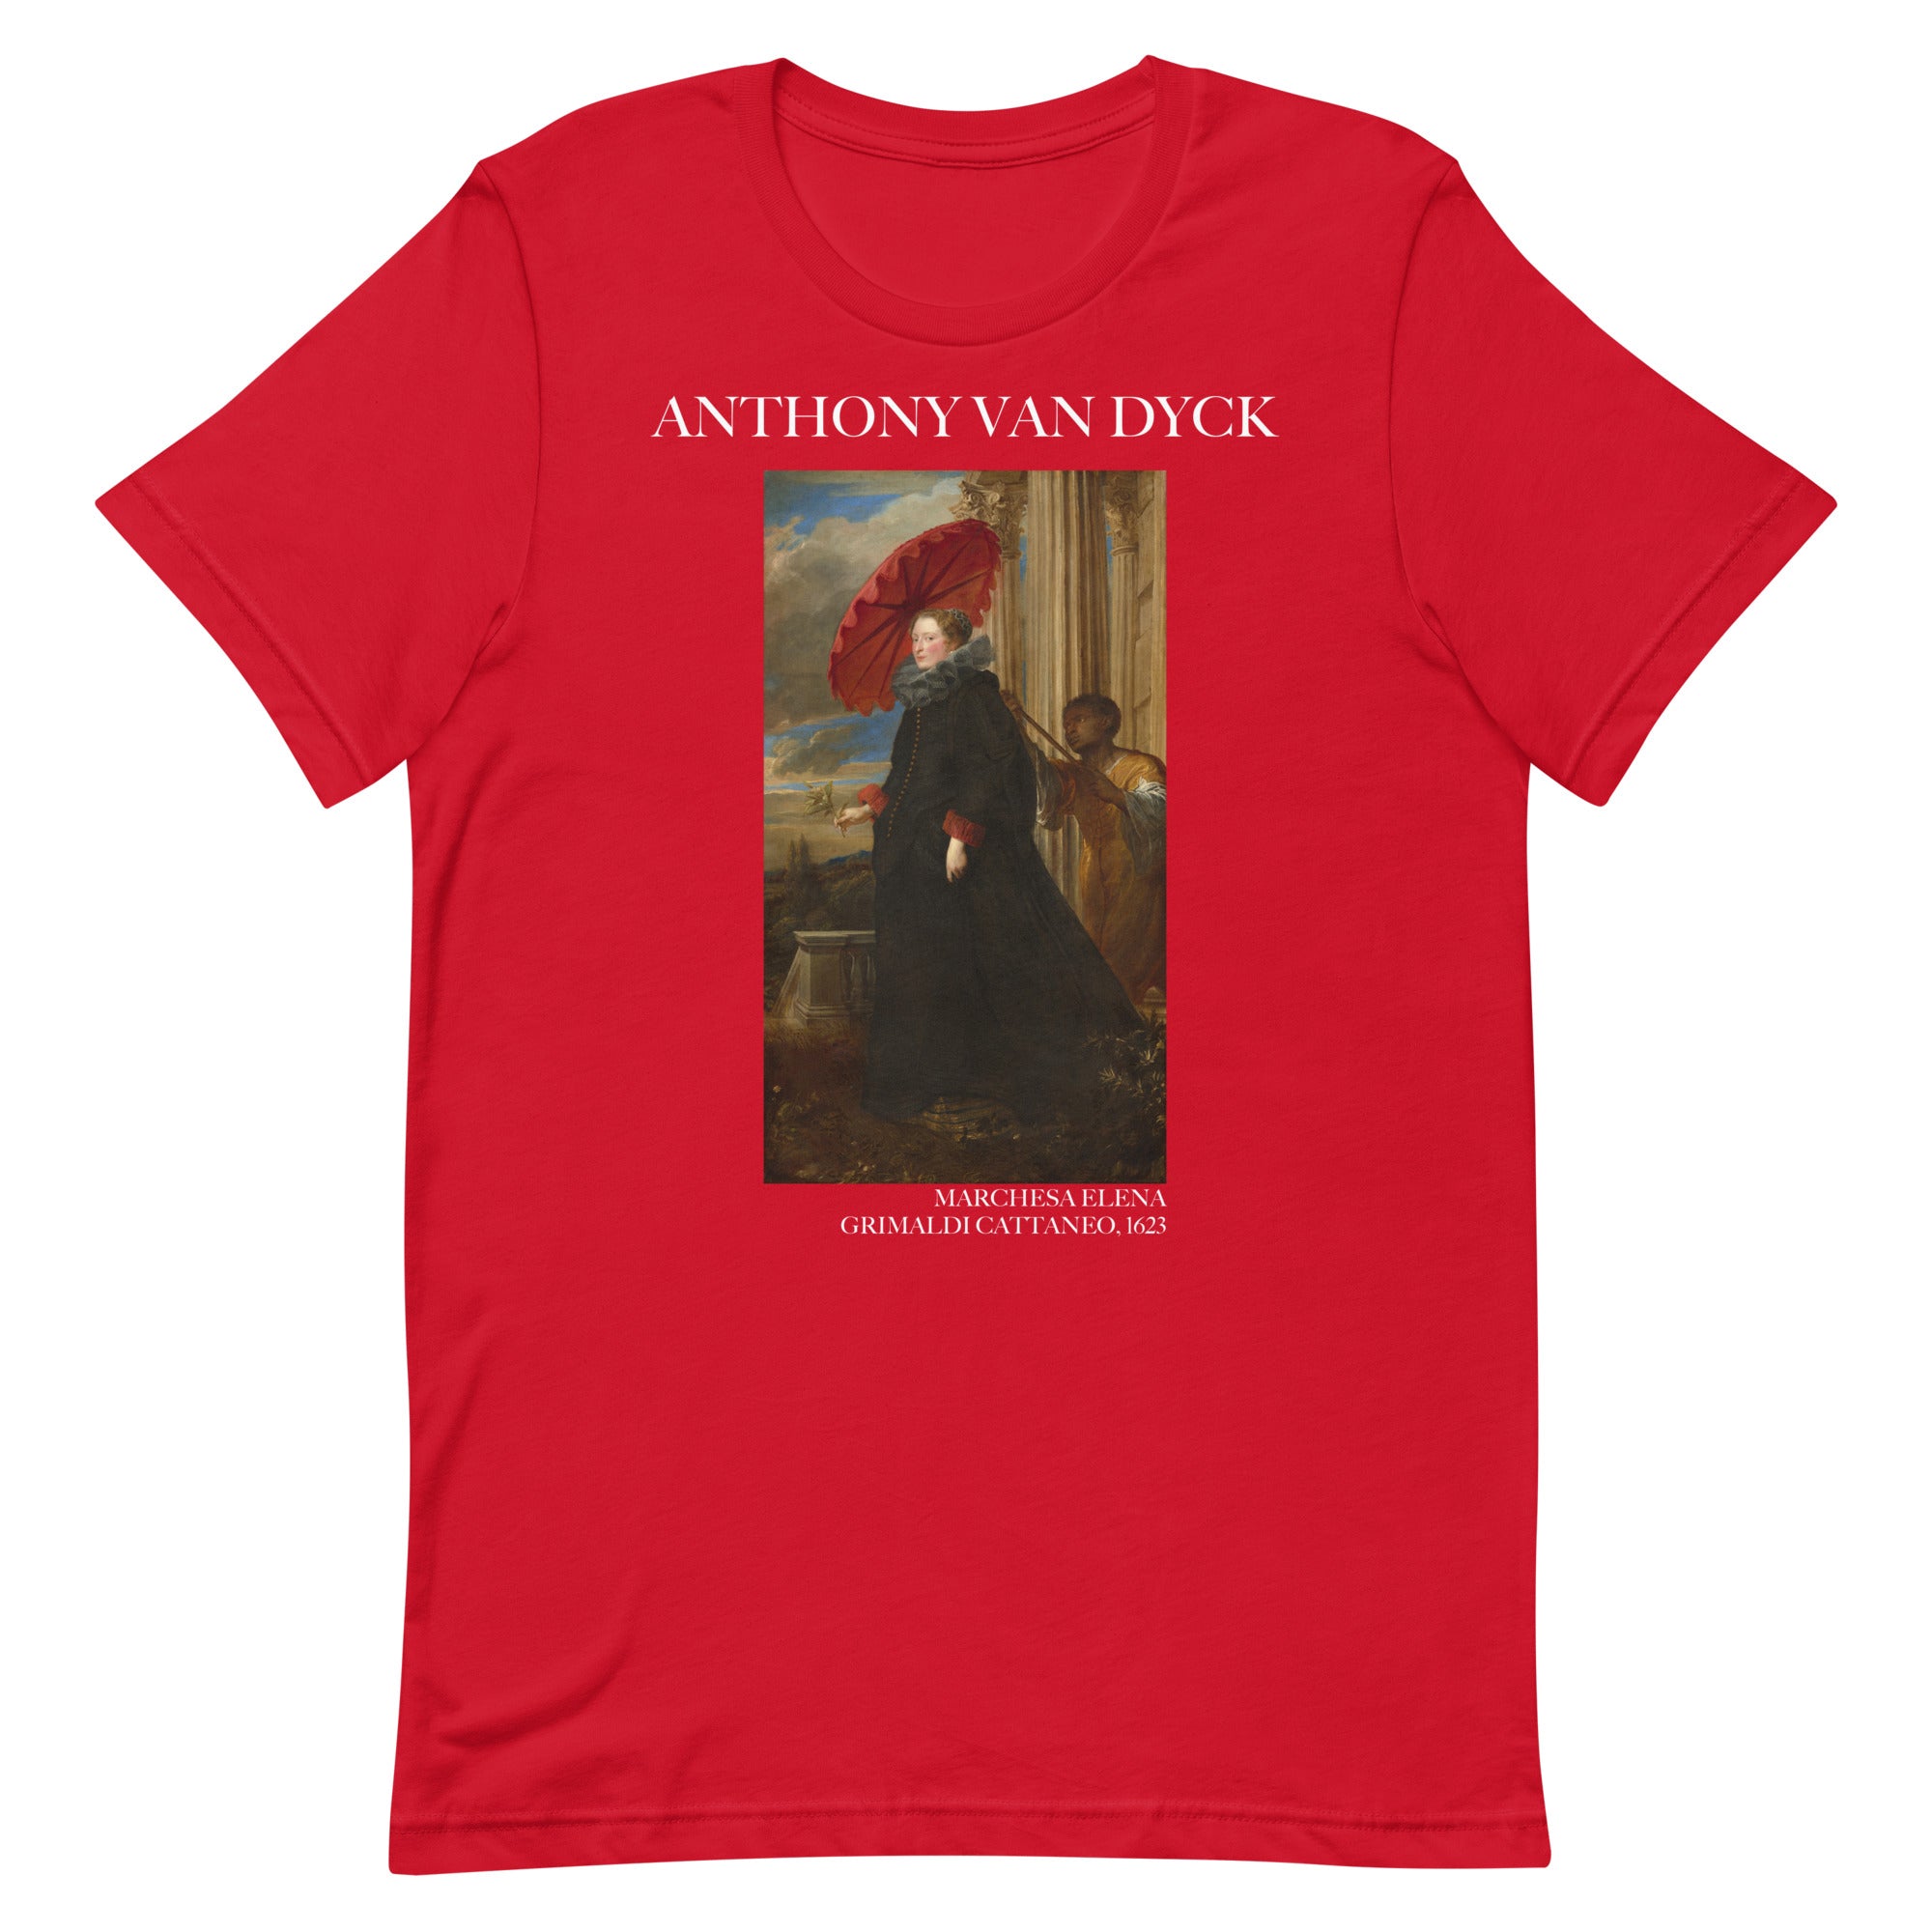 Sir Anthony van Dyck 'Marchesa Elena Grimaldi Cattaneo' Famous Painting T-Shirt | Unisex Classic Art Tee